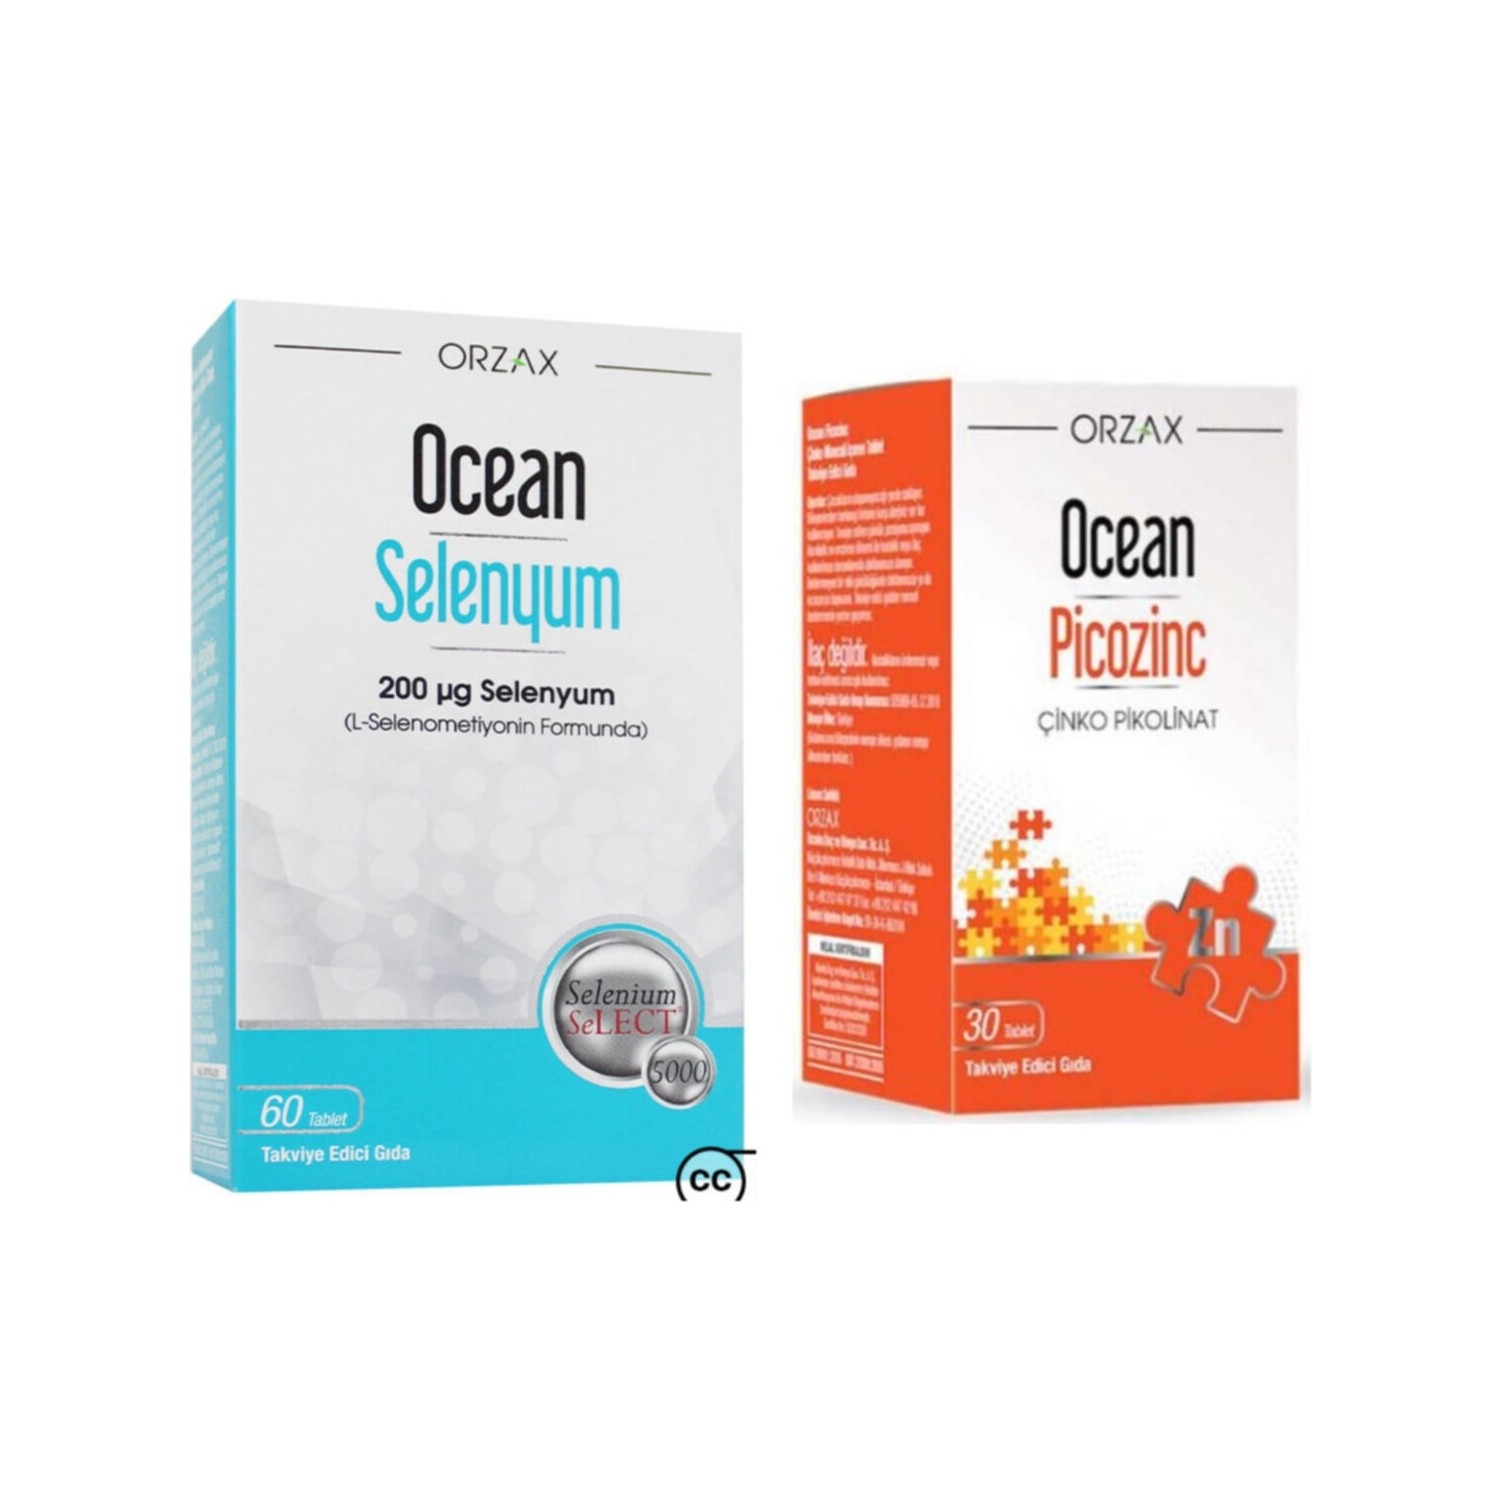 Селен Ocean 200 мкг, 60 таблеток + Пищевая добавка Ocean Picozinc Cinko Picolinate, 30 капсул добавка селена ocean 200 мкг 60 таблеток